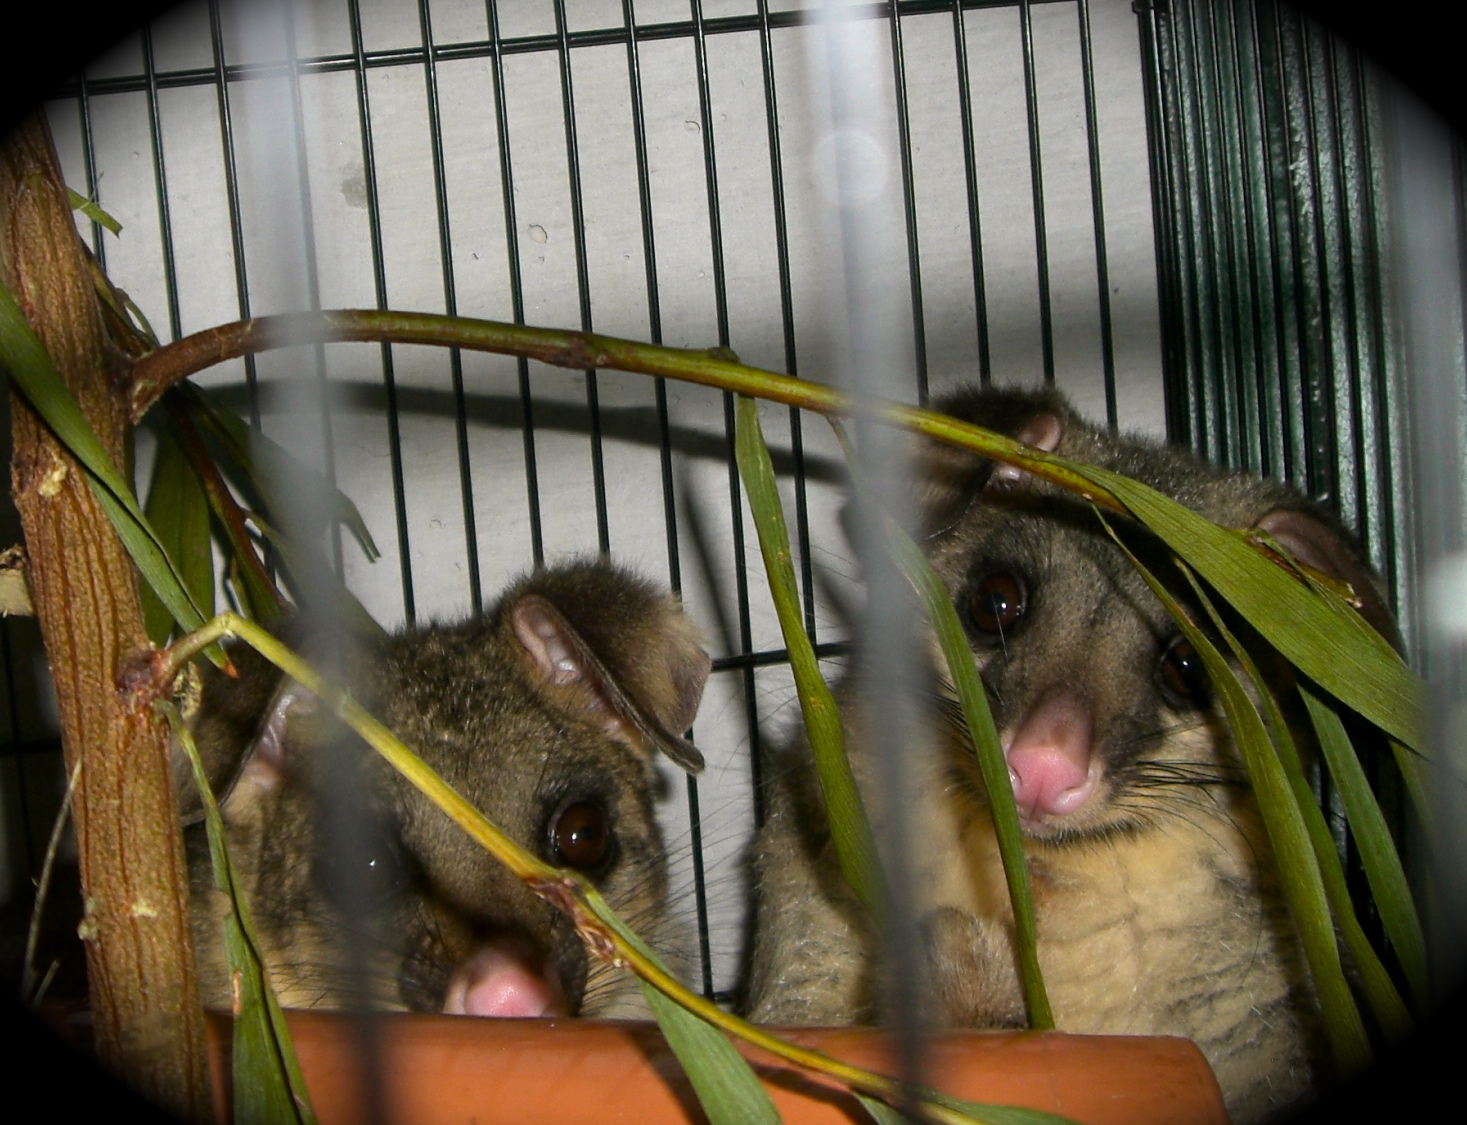 WIRES - Fatso & Fuzzy's Brushtail Possum Rescue